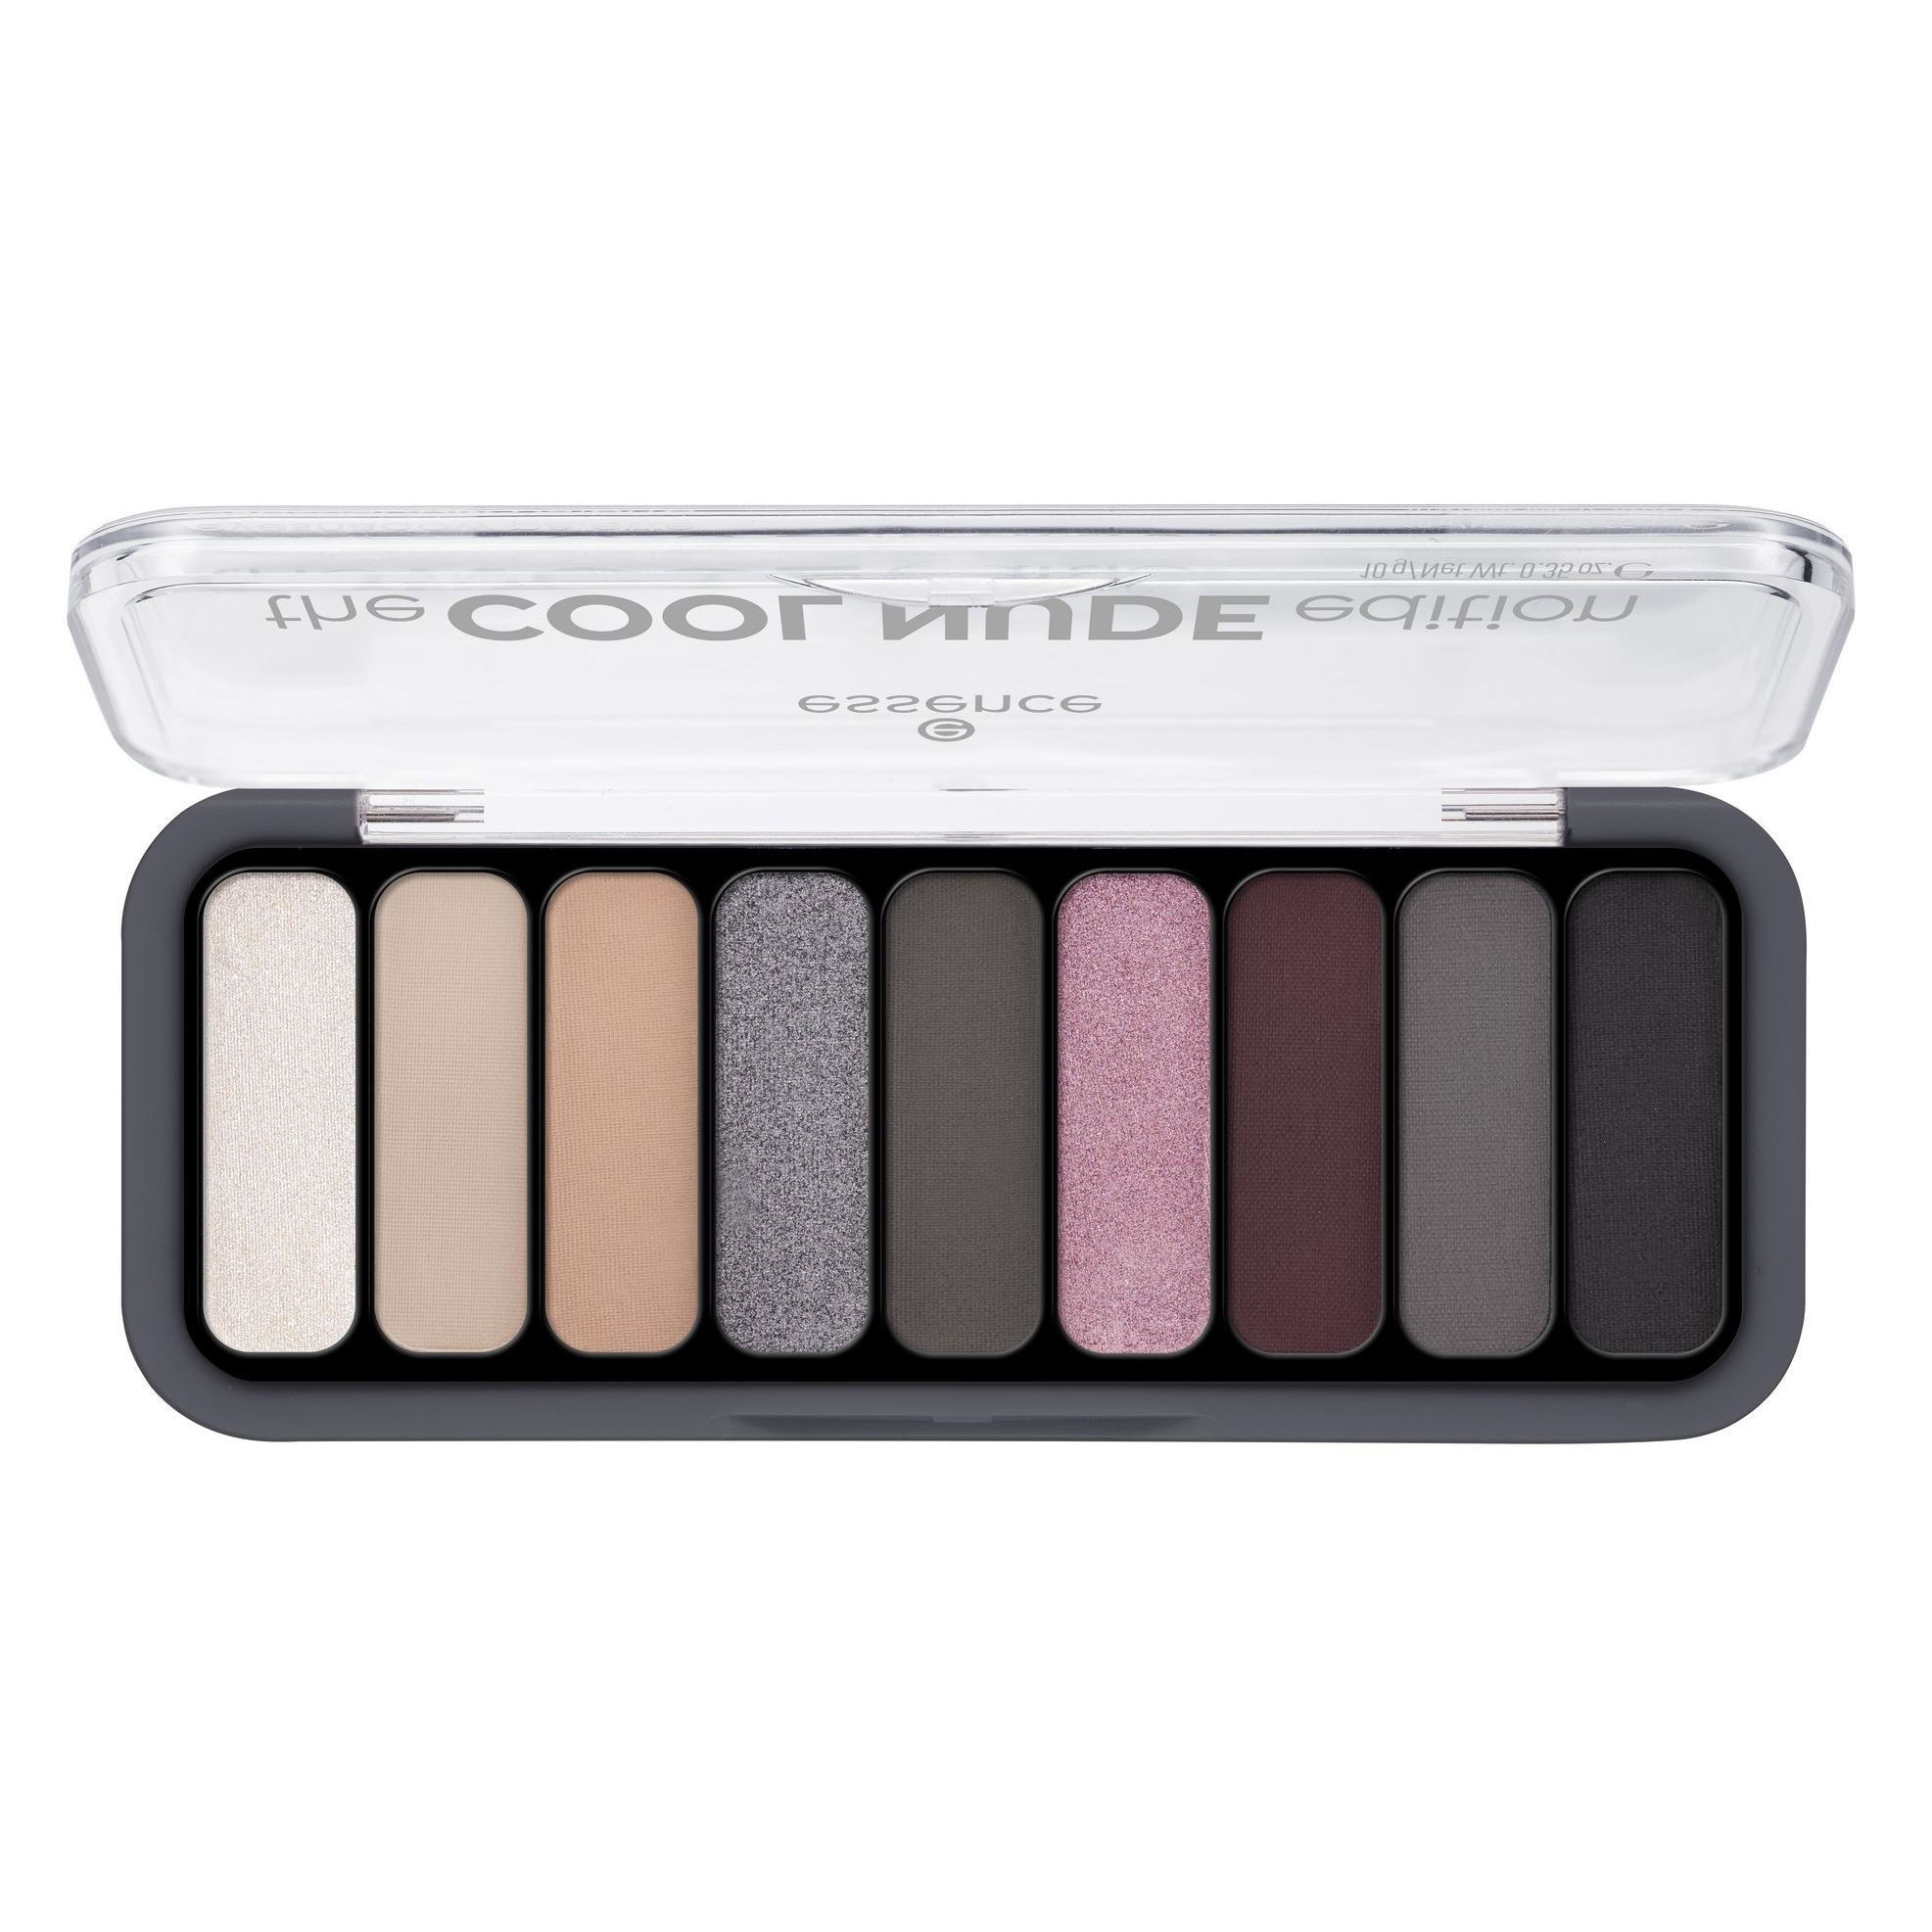 Lidschatten-Palette - The Cool Nude Edition Eyeshadow Palette